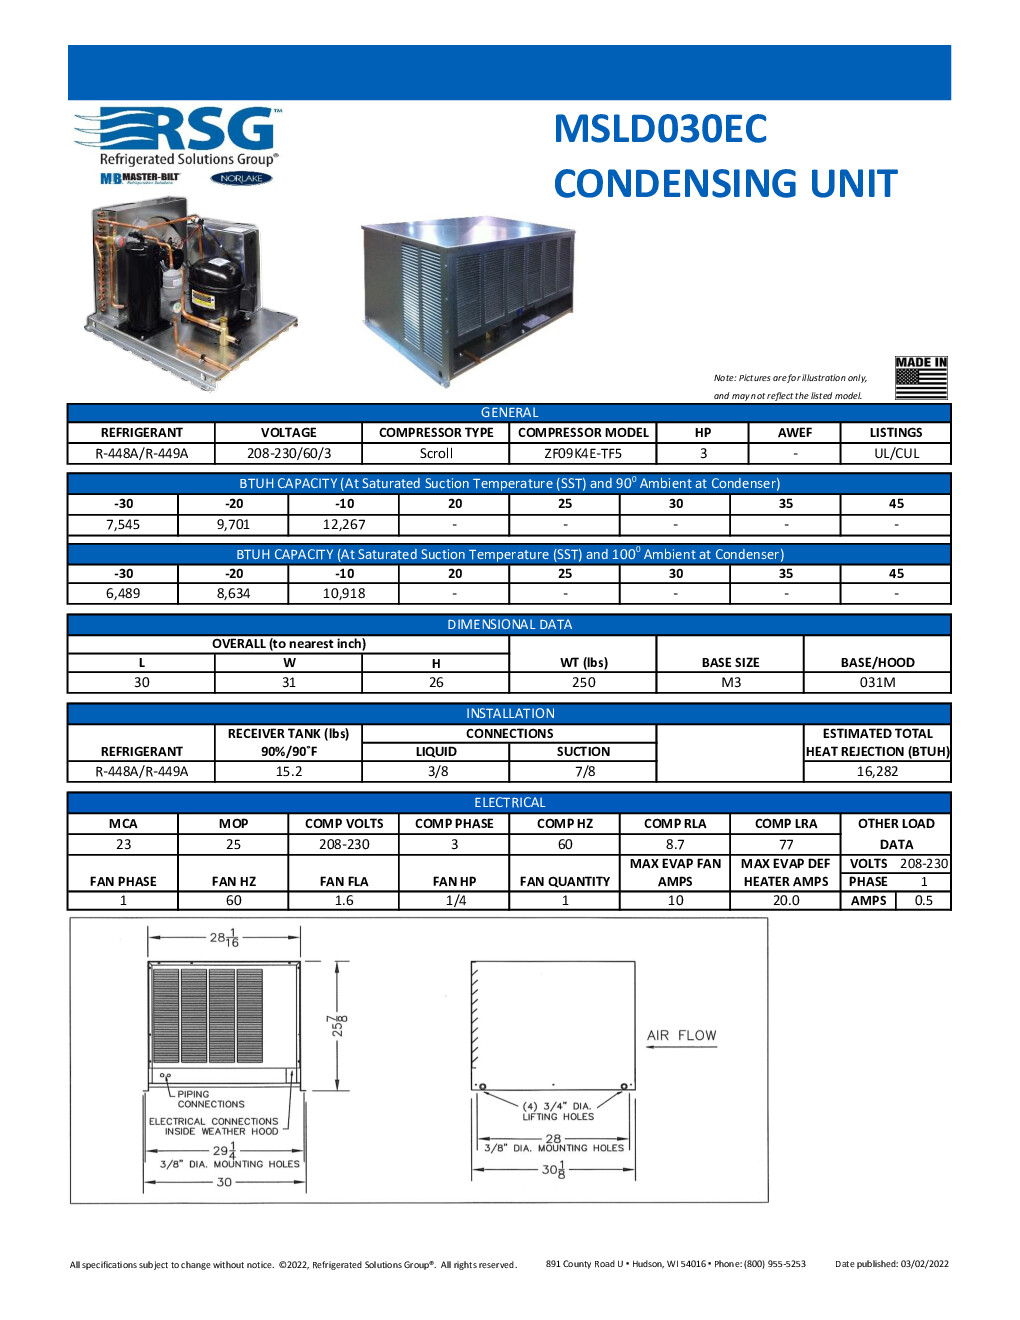 Master-Bilt MSLD030EC Remote Low Temp Scroll Condensing Unit, 3 HP, 208-230v/60/3-ph